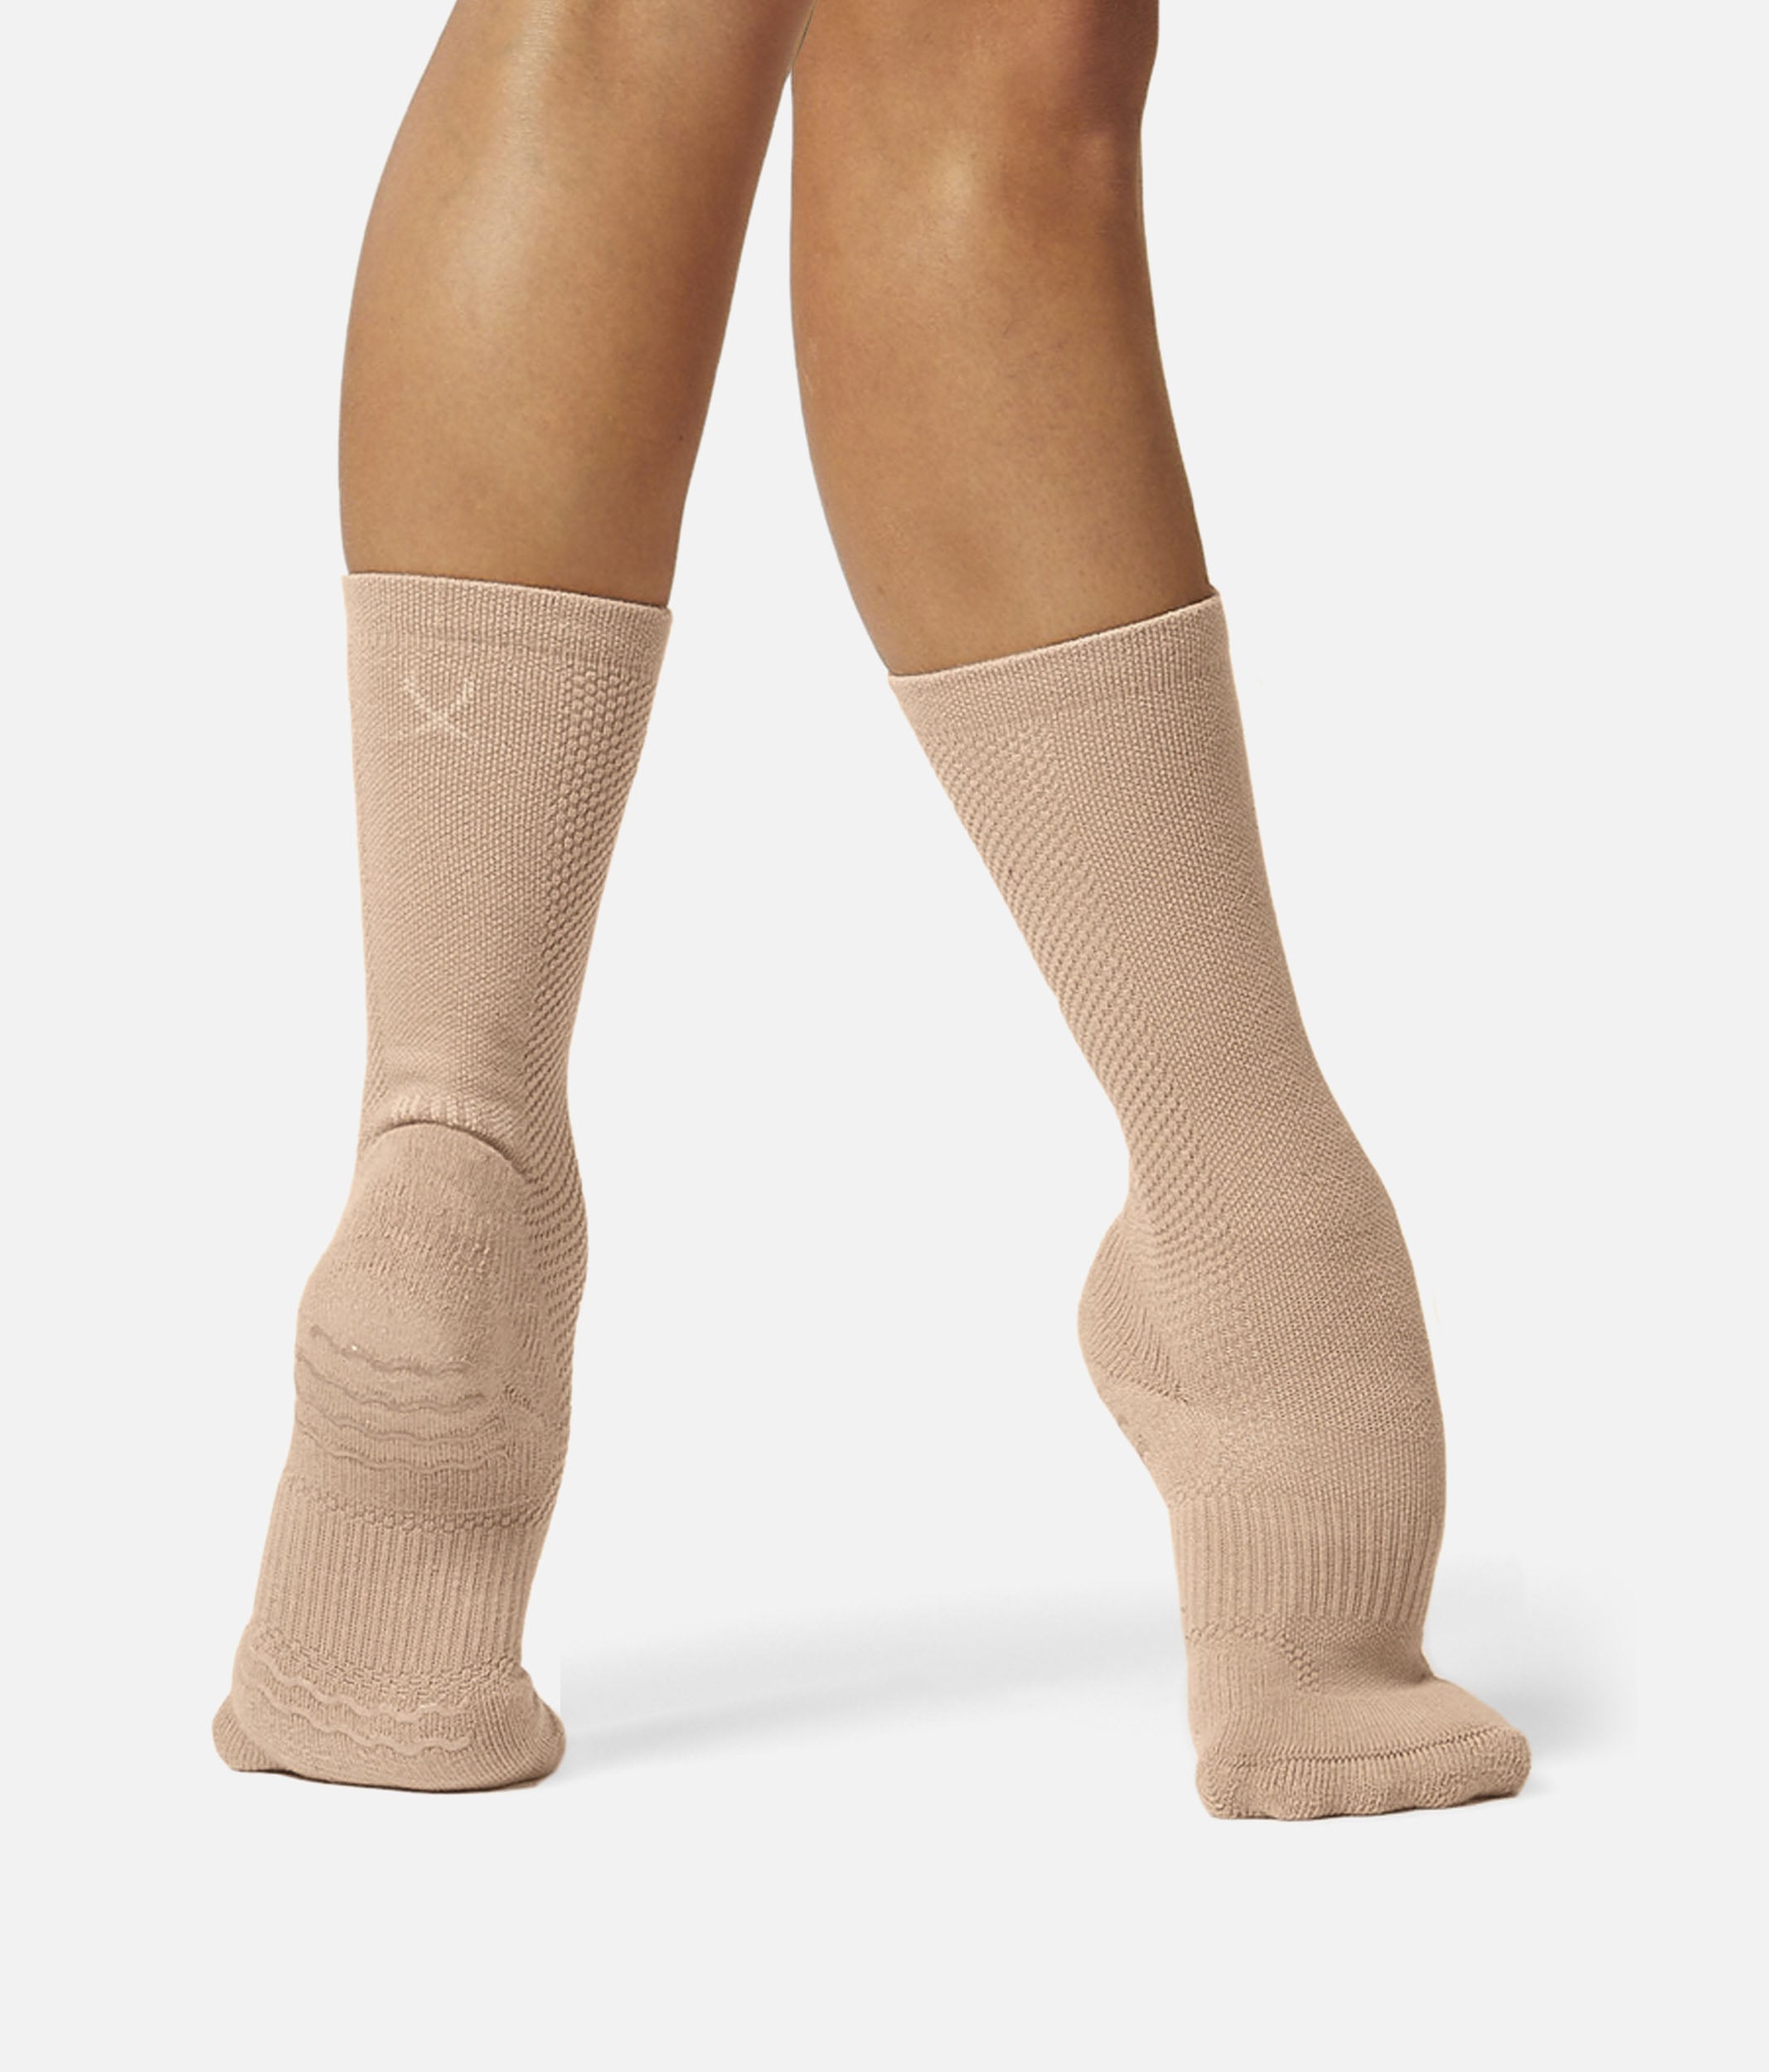 Dance Socks, Blochsox - A 1000